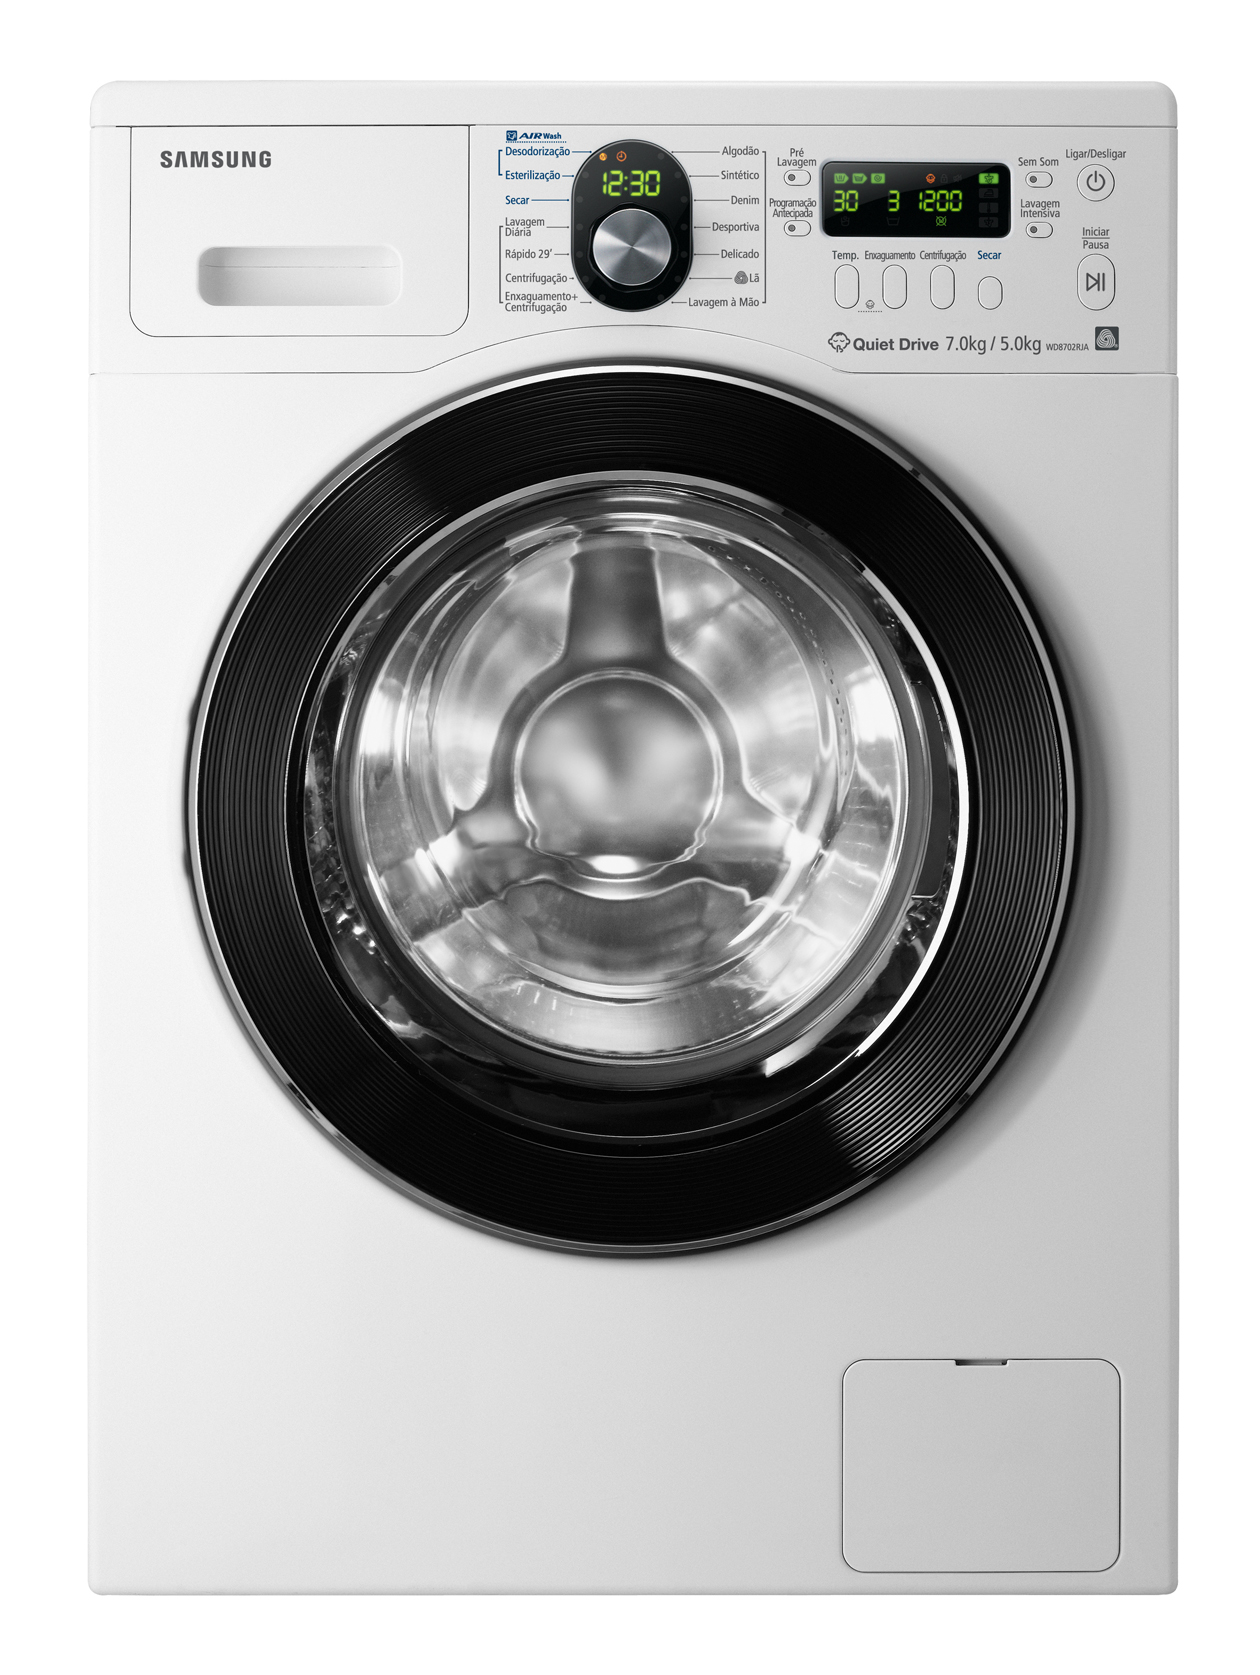 Samsung diamond drum washing machine 6.5 kg manual